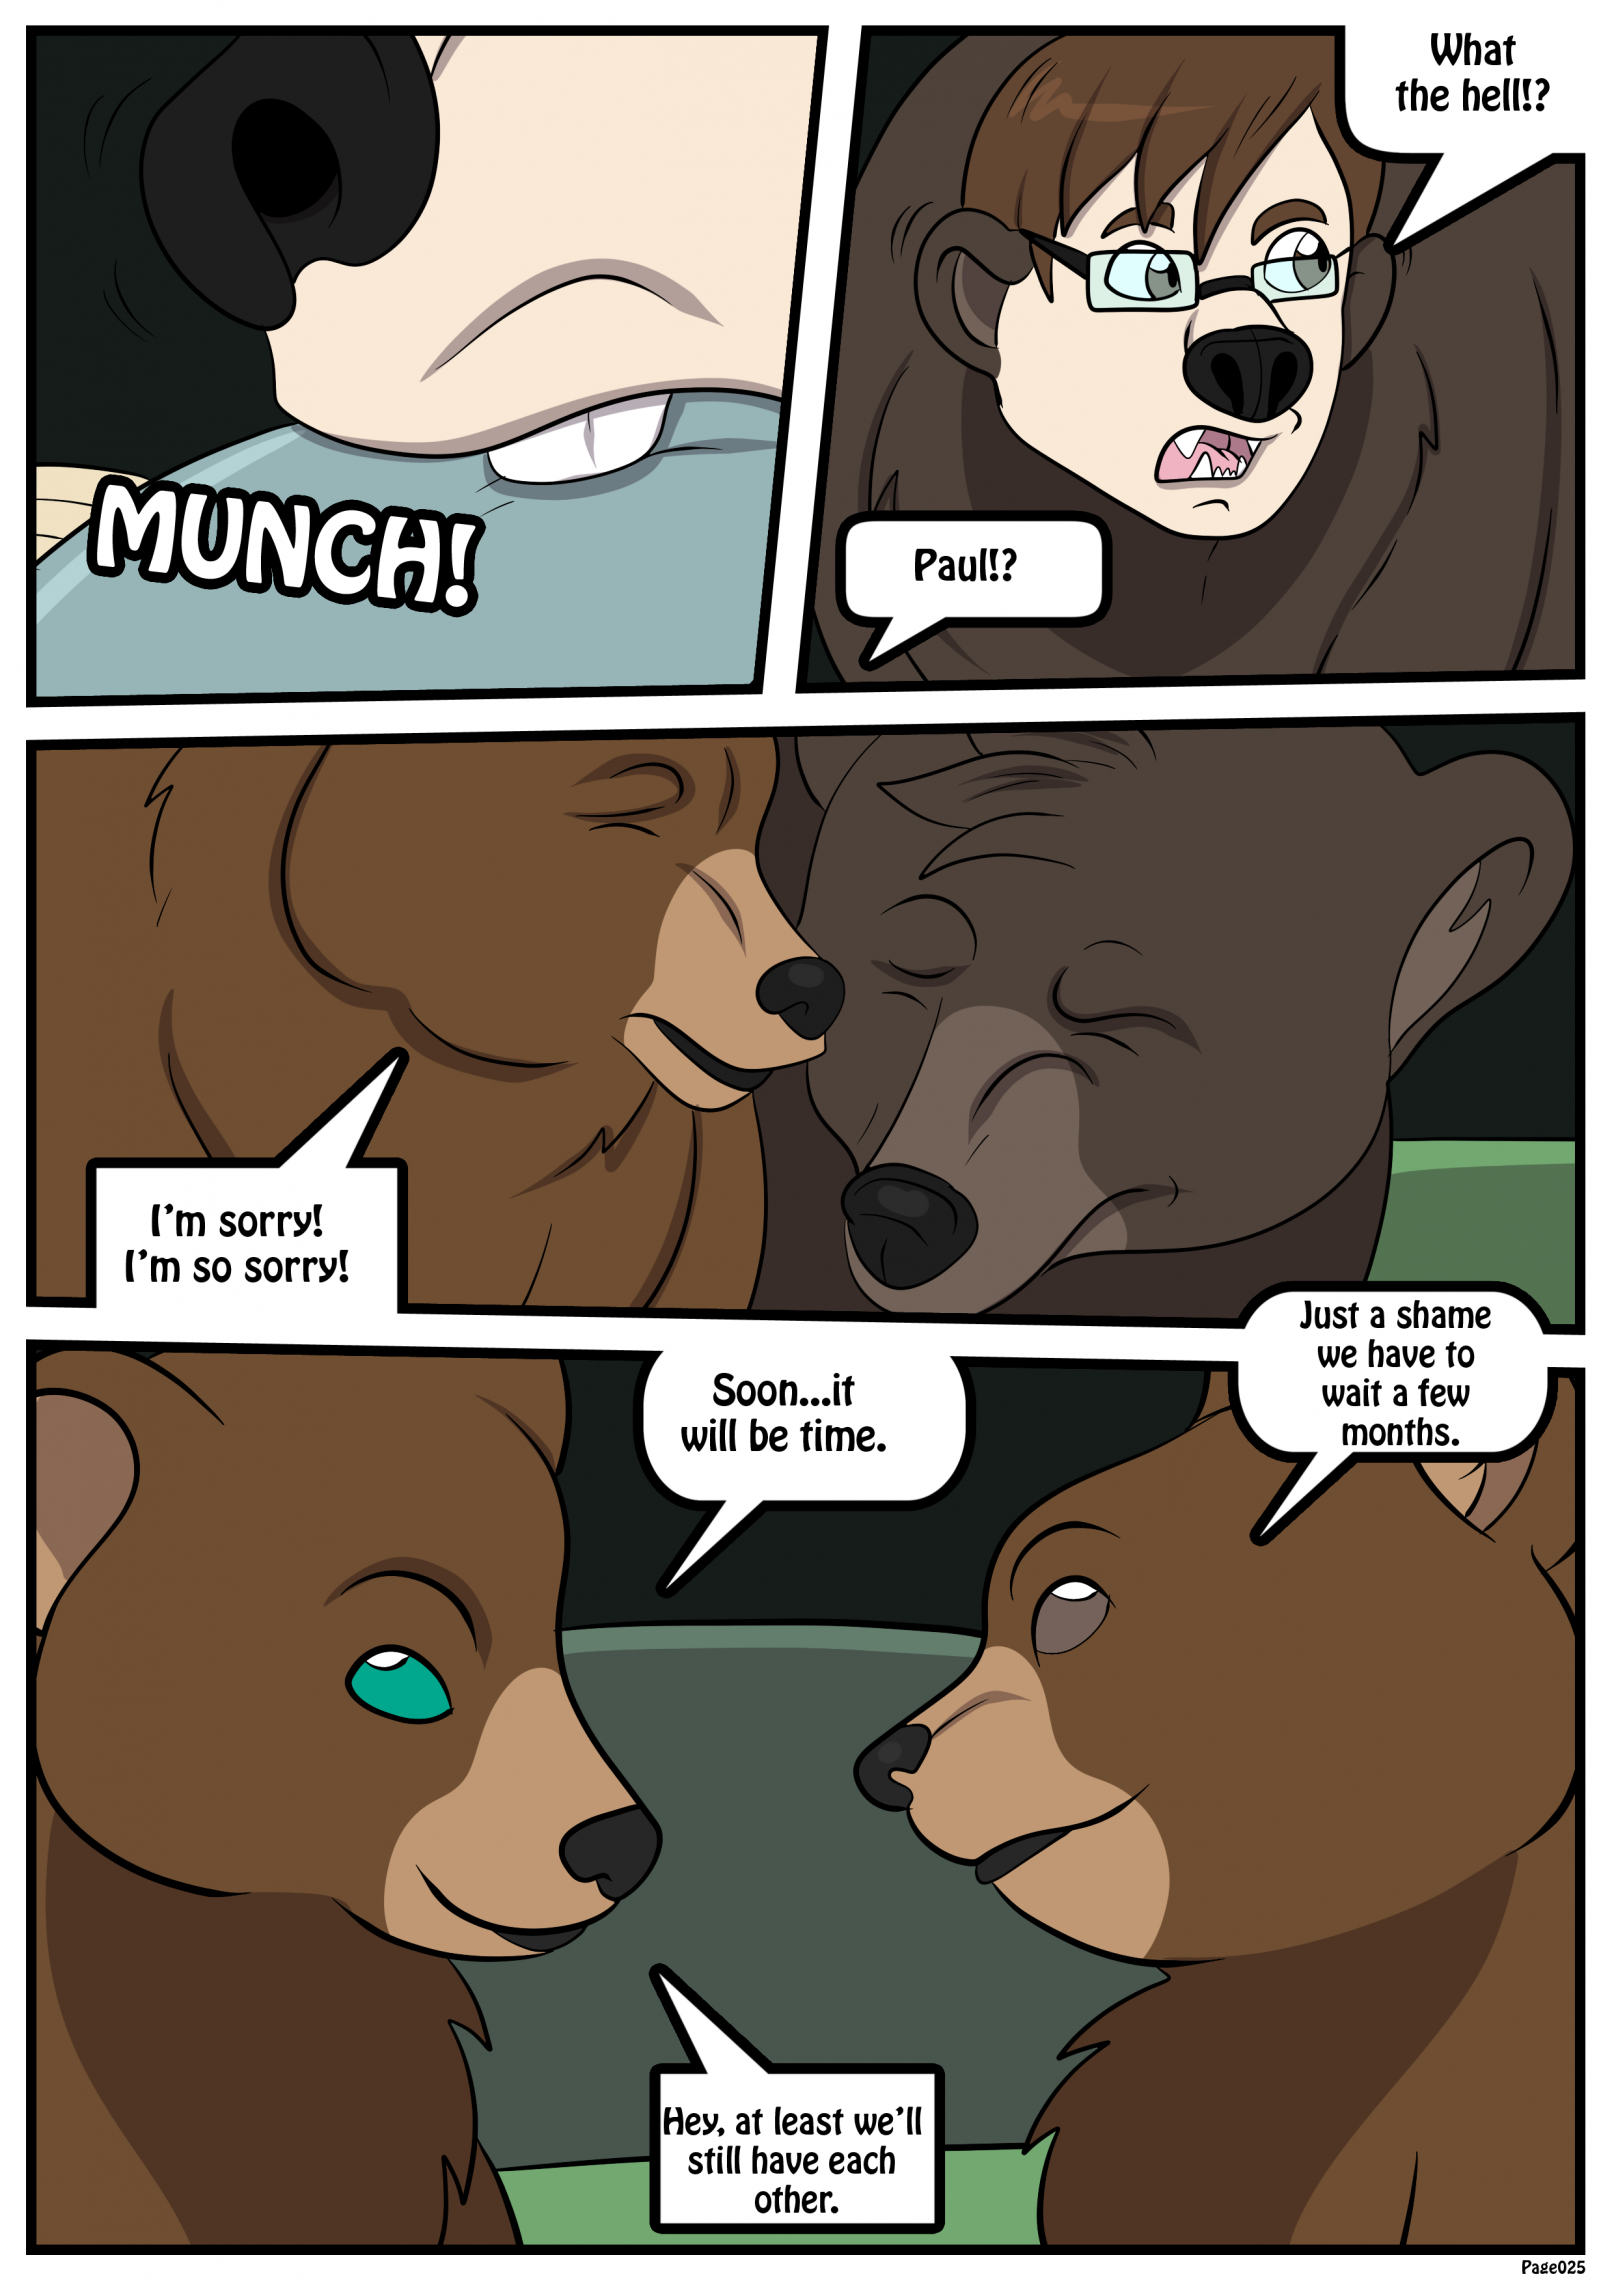 Browse Bear Alpha/Bear* Comics - Comic Studio